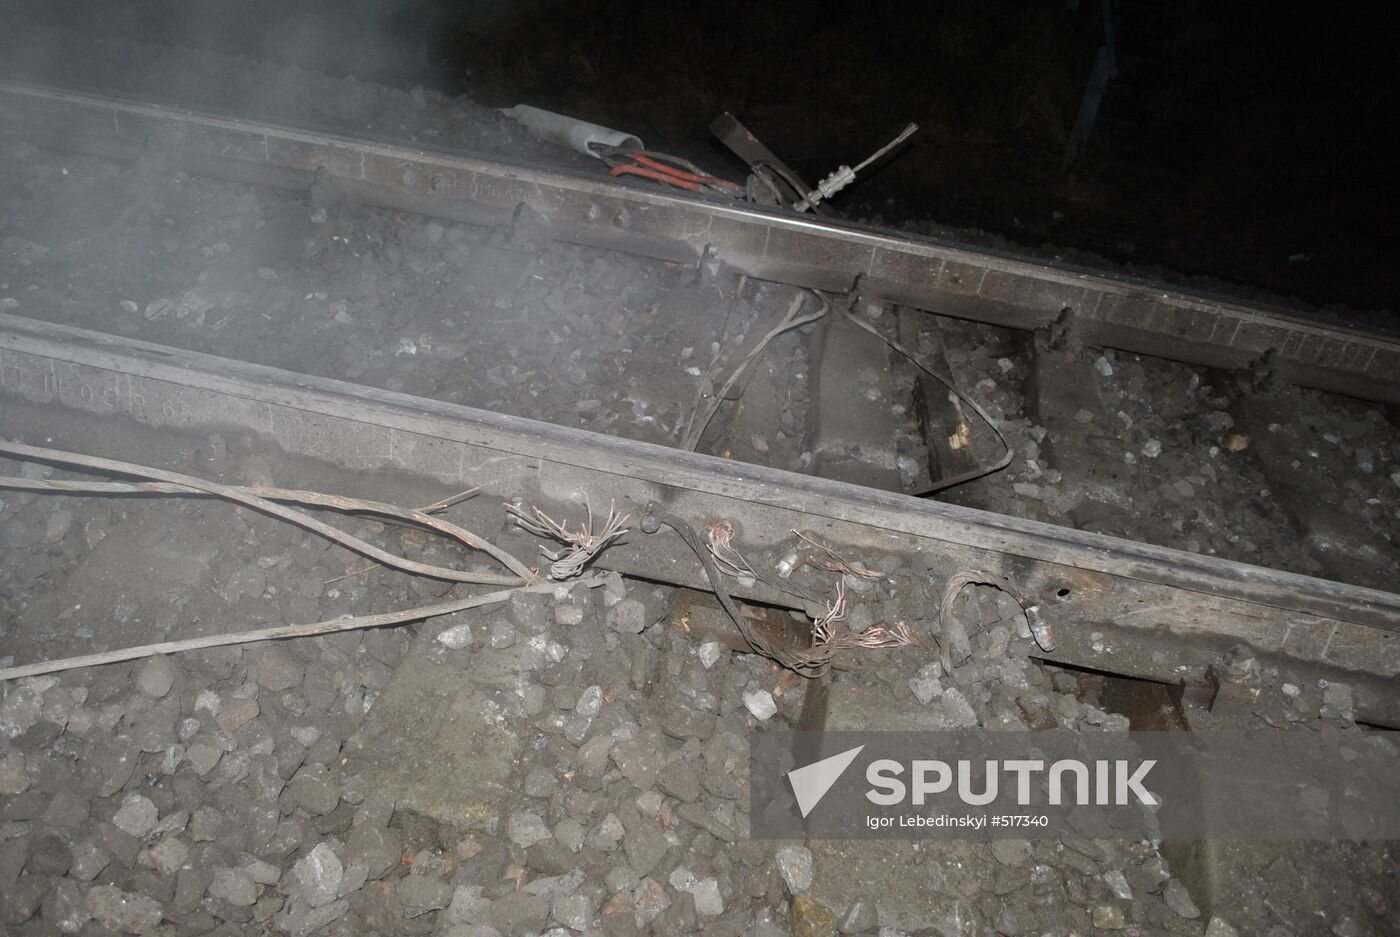 Nevsky Express train derails in Tver region